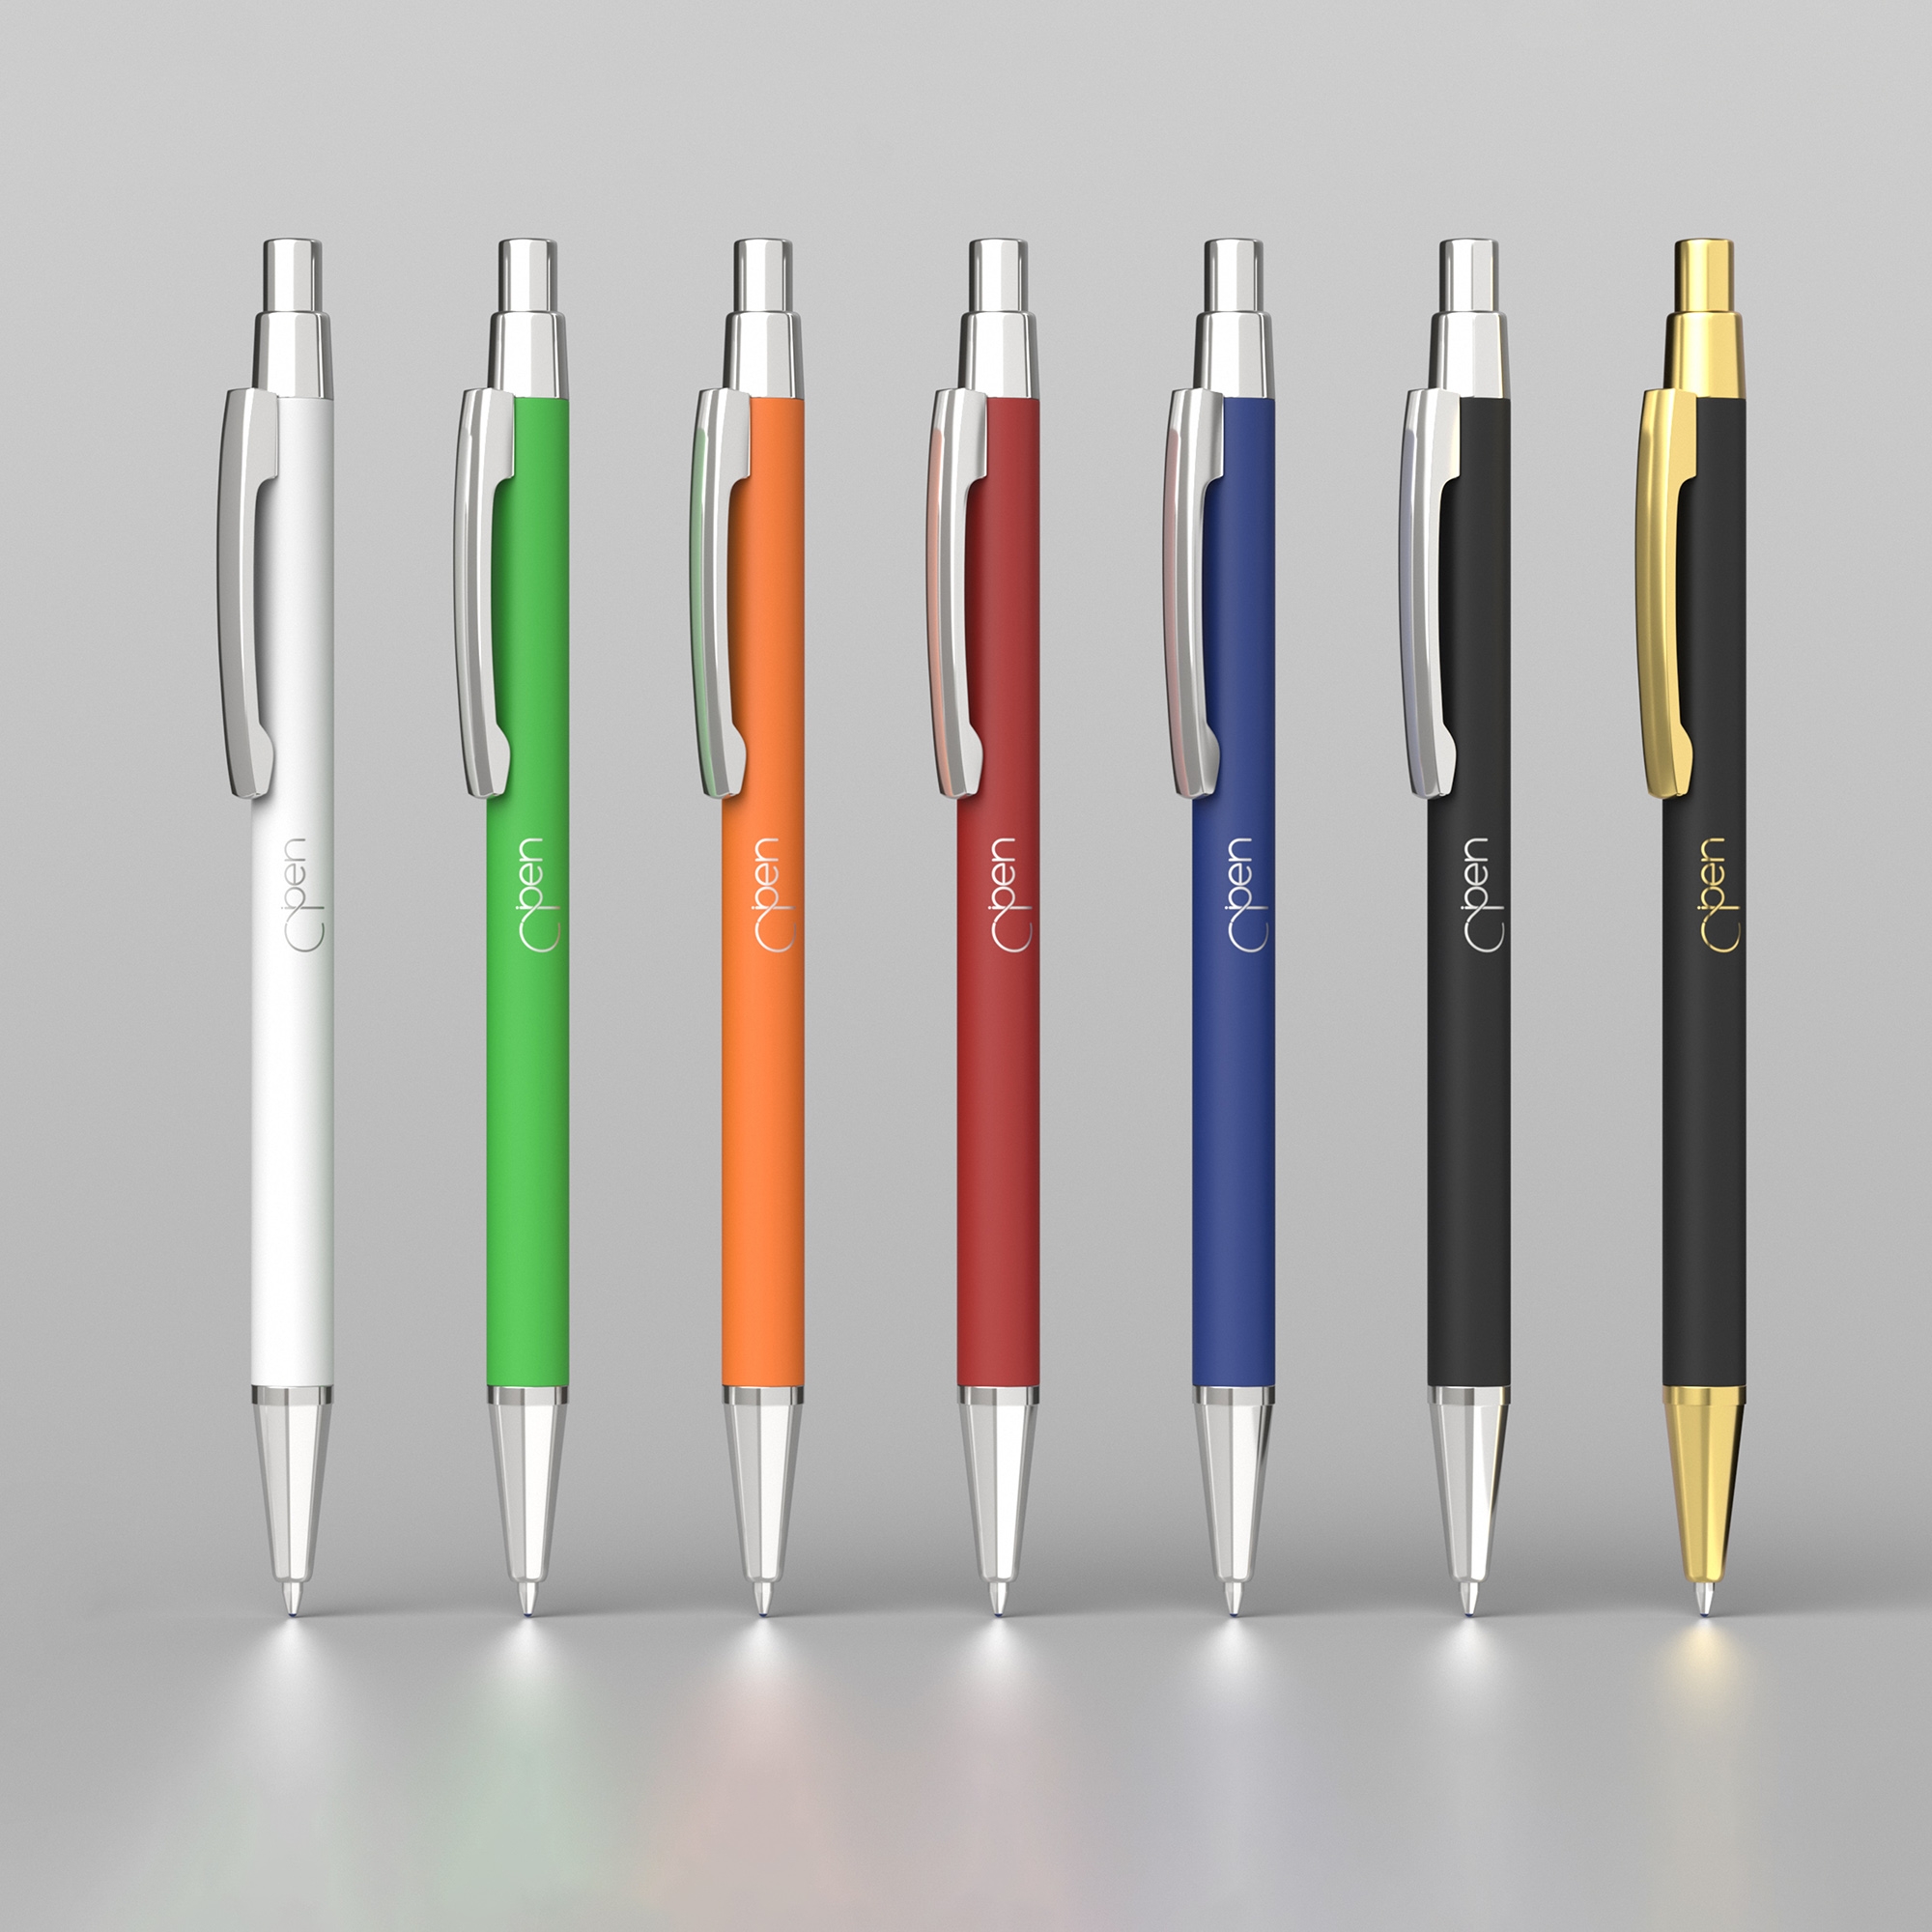 Ручка шариковая "Ray", покрытие soft touch, зеленый, металл/soft touch